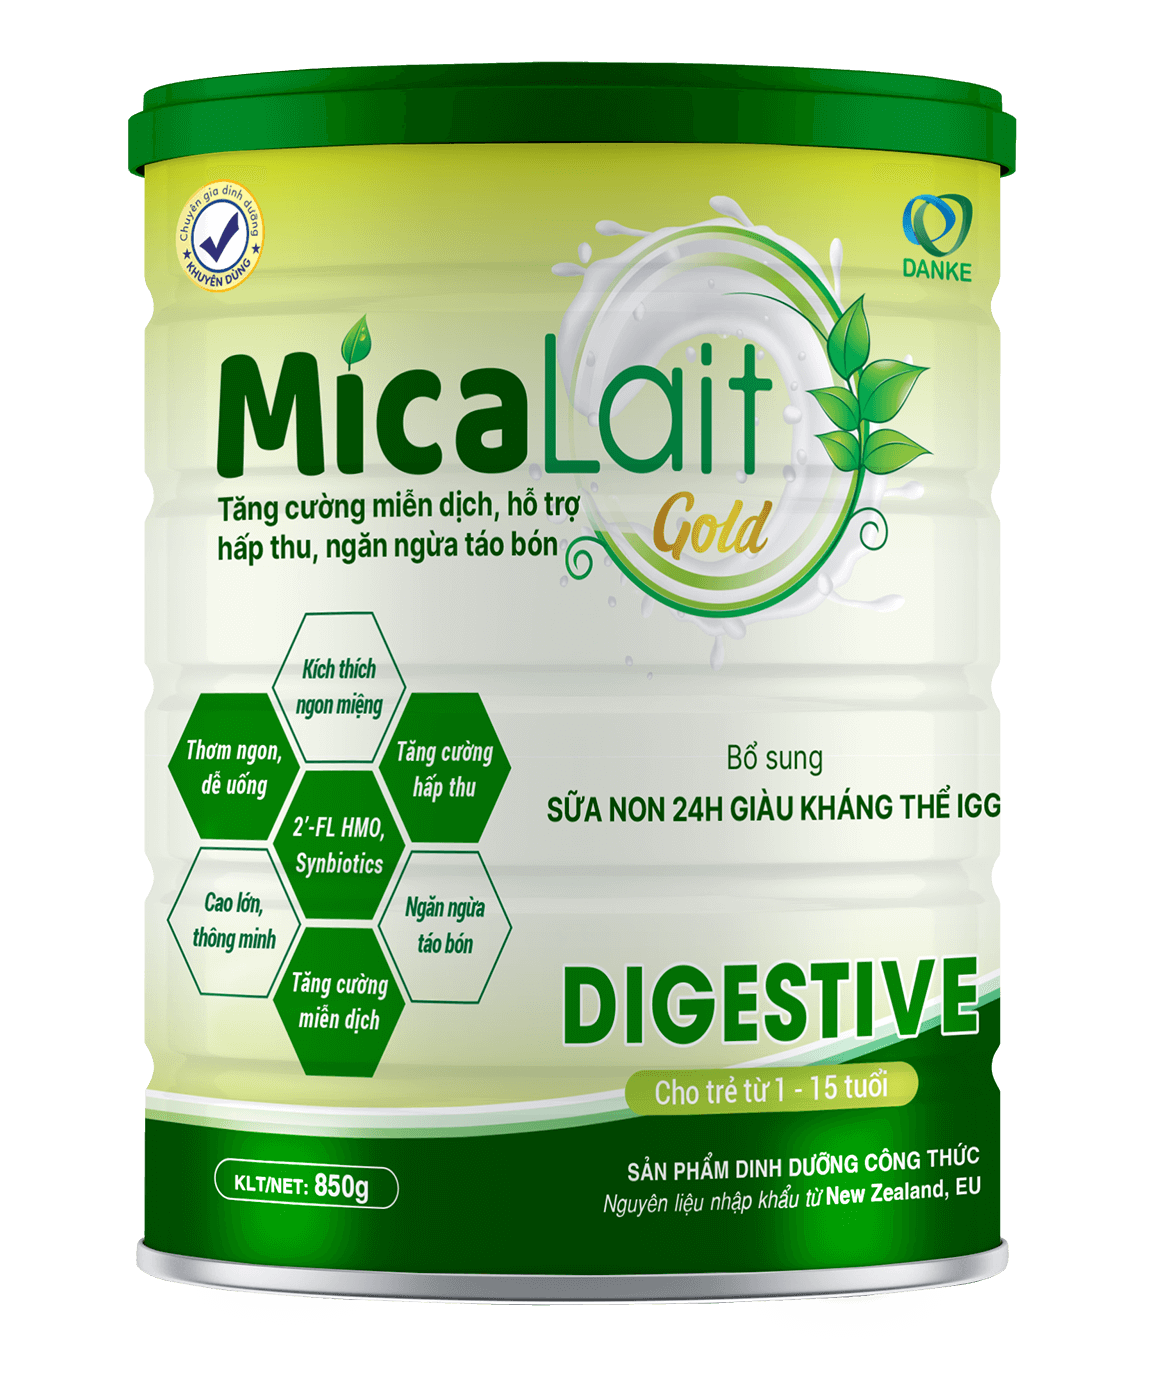 Sữa Micalait Gold Digestive